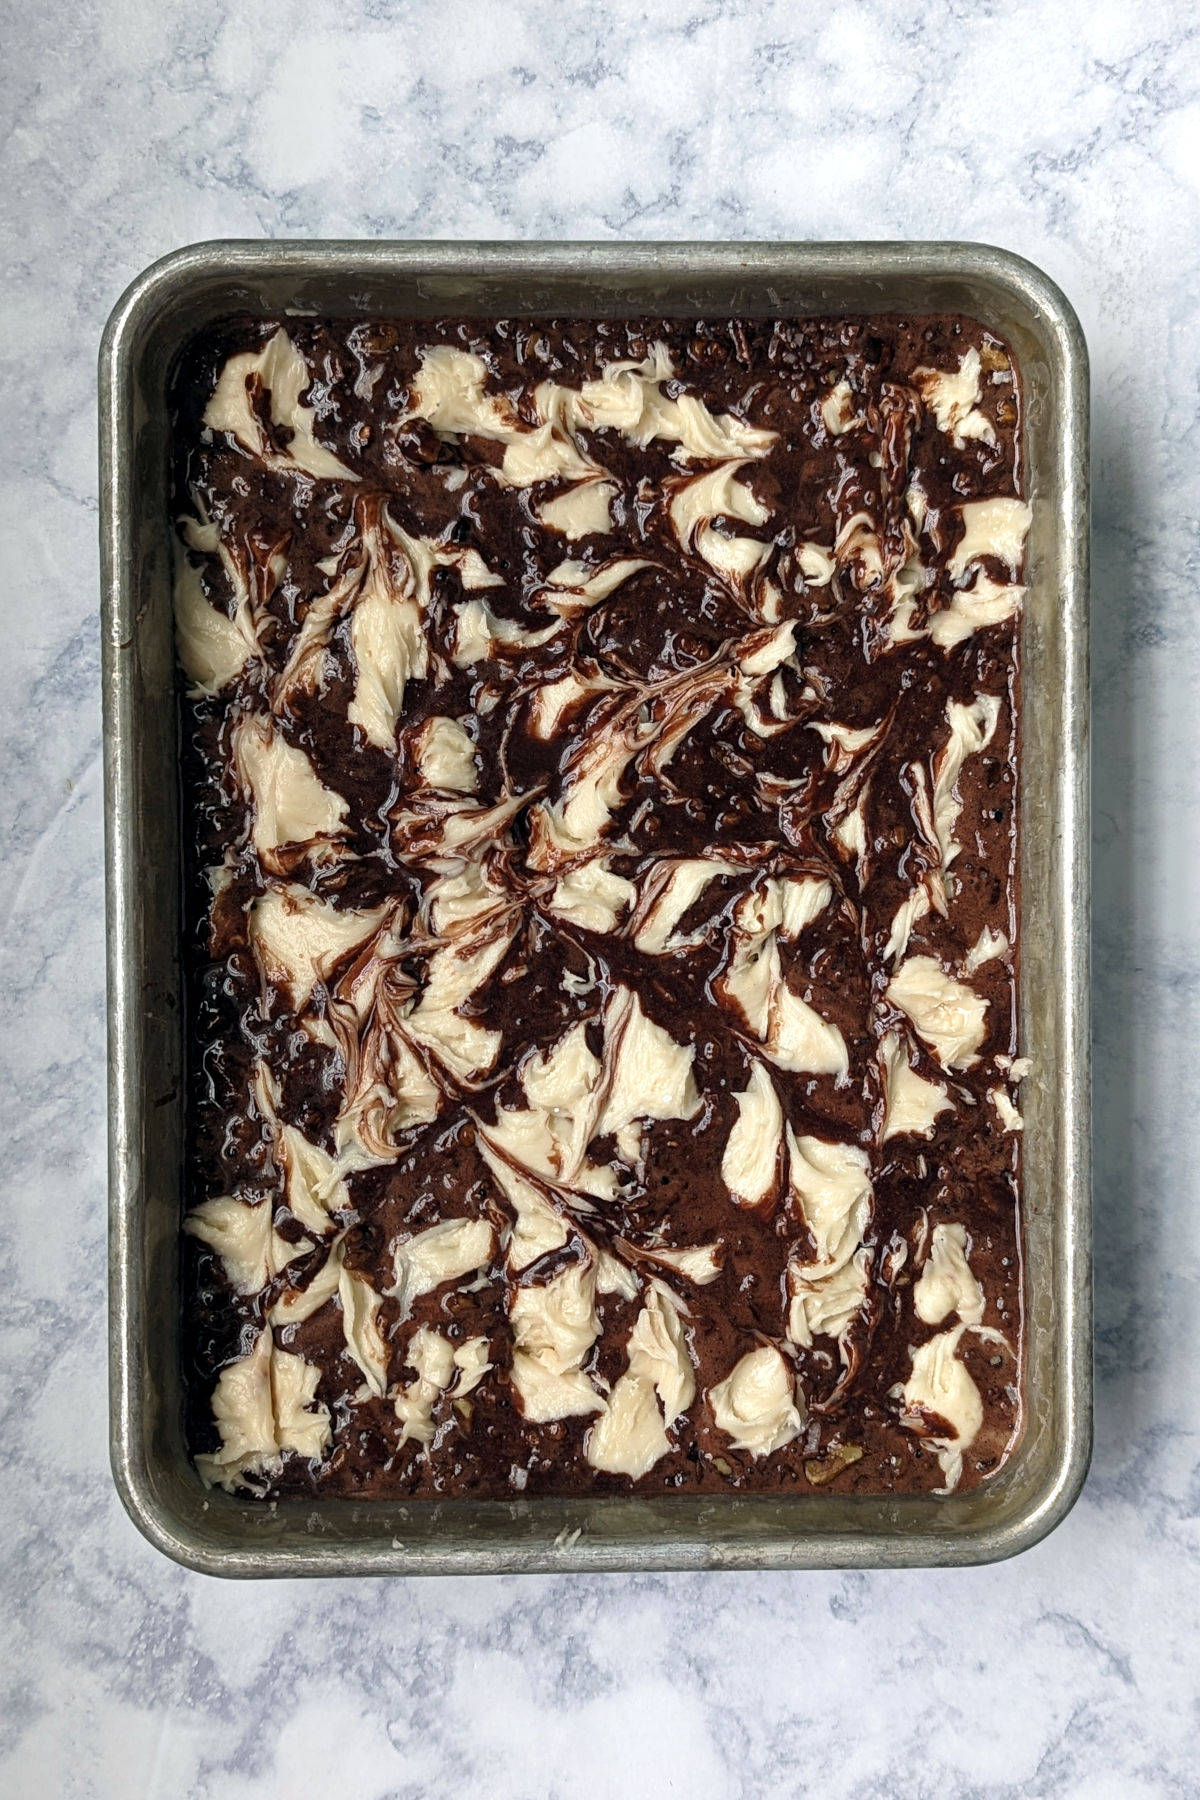 cream cheese frosting swirled into chocolate cake batter